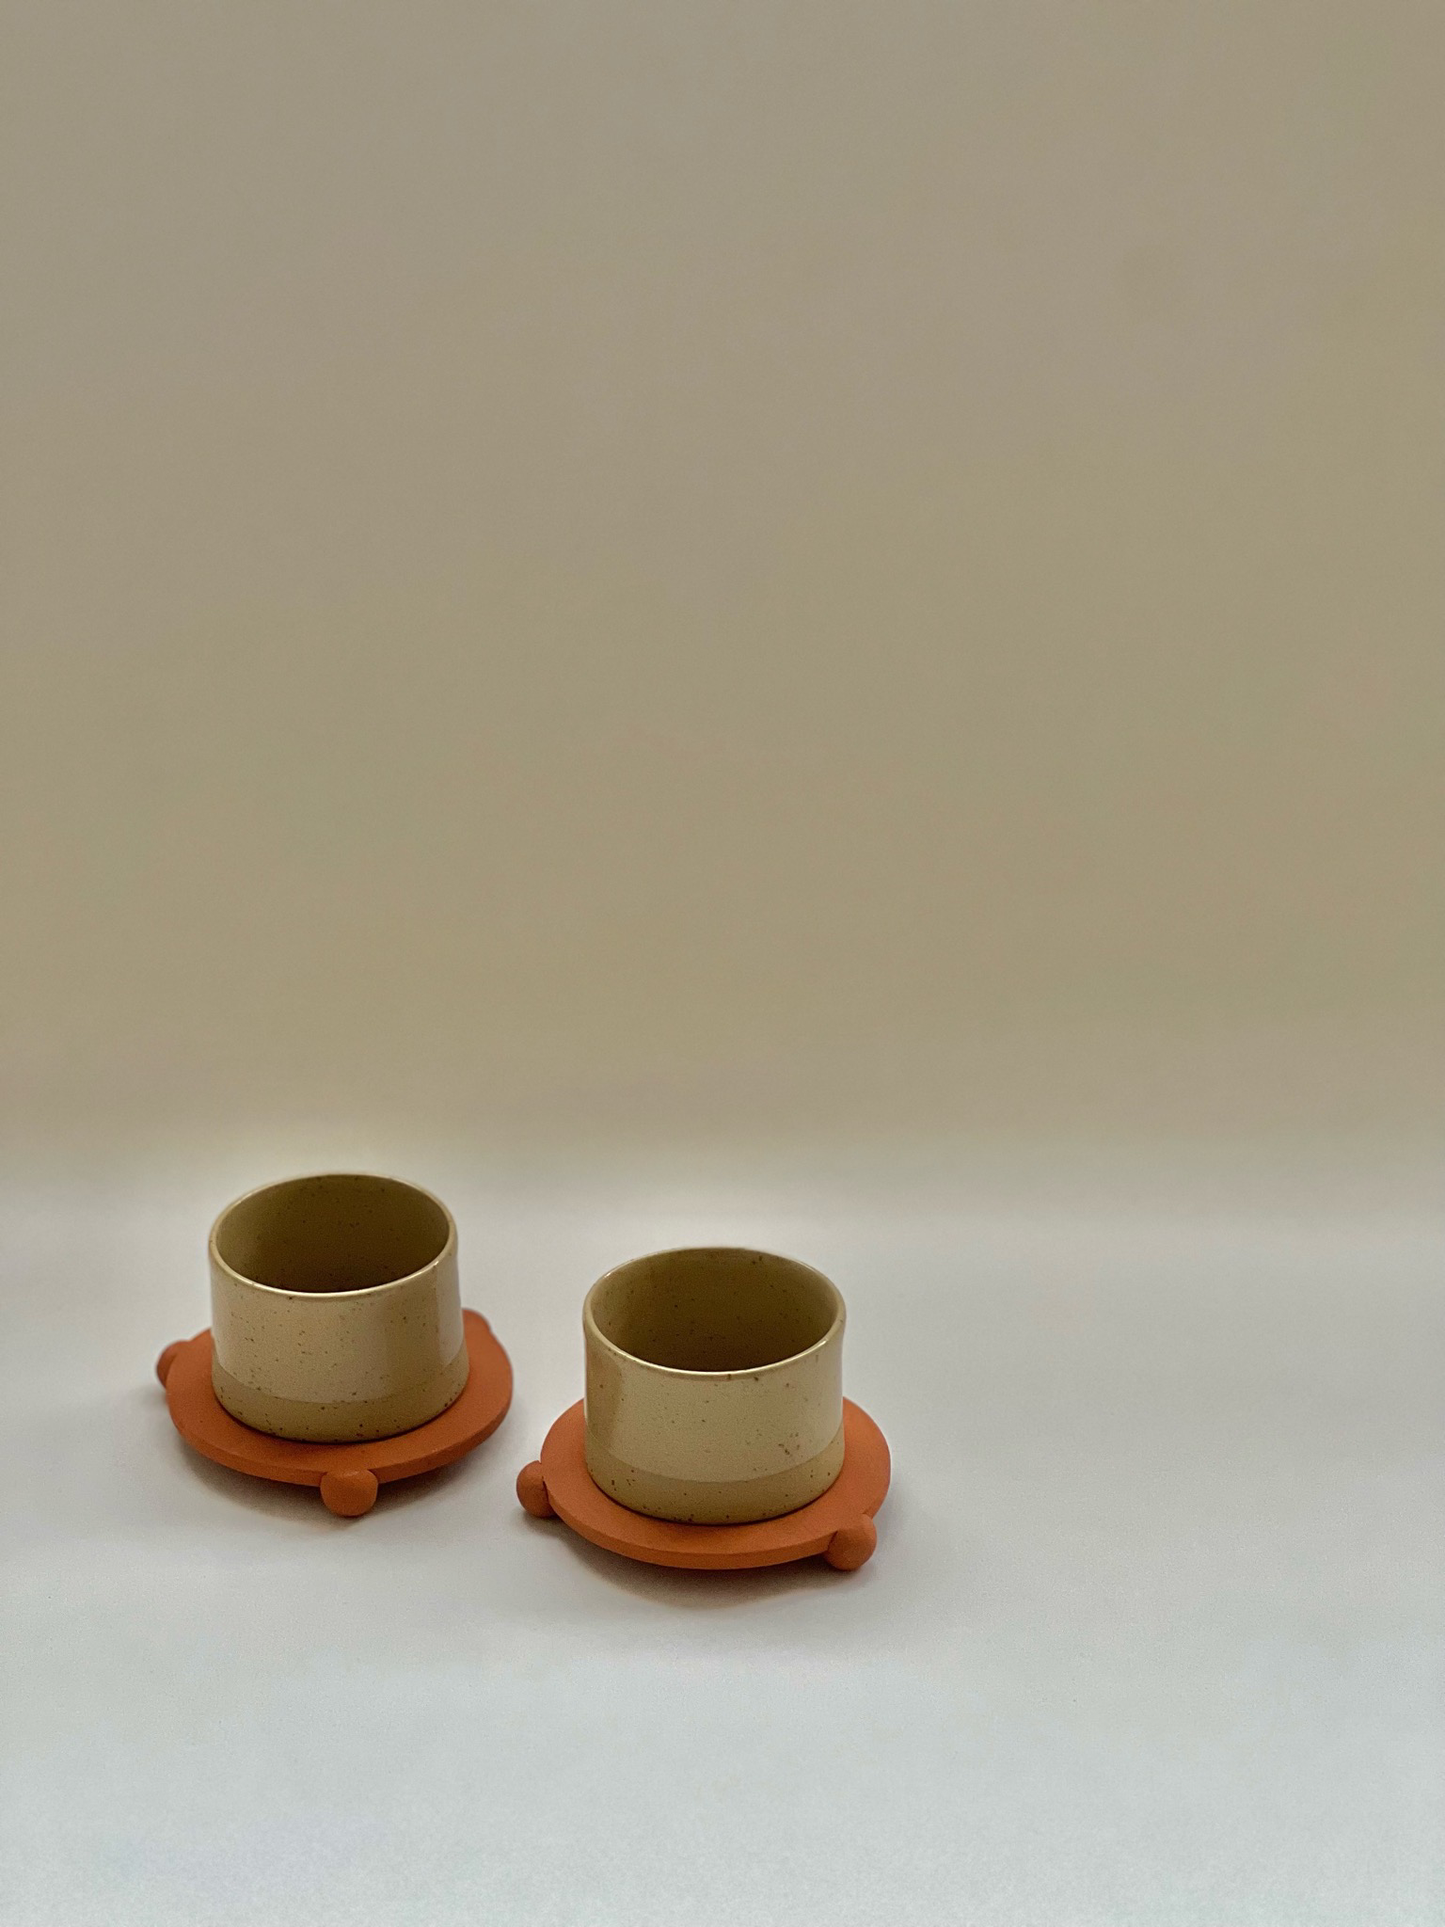 3 oz handleless cup with terracotta ball legs saucer